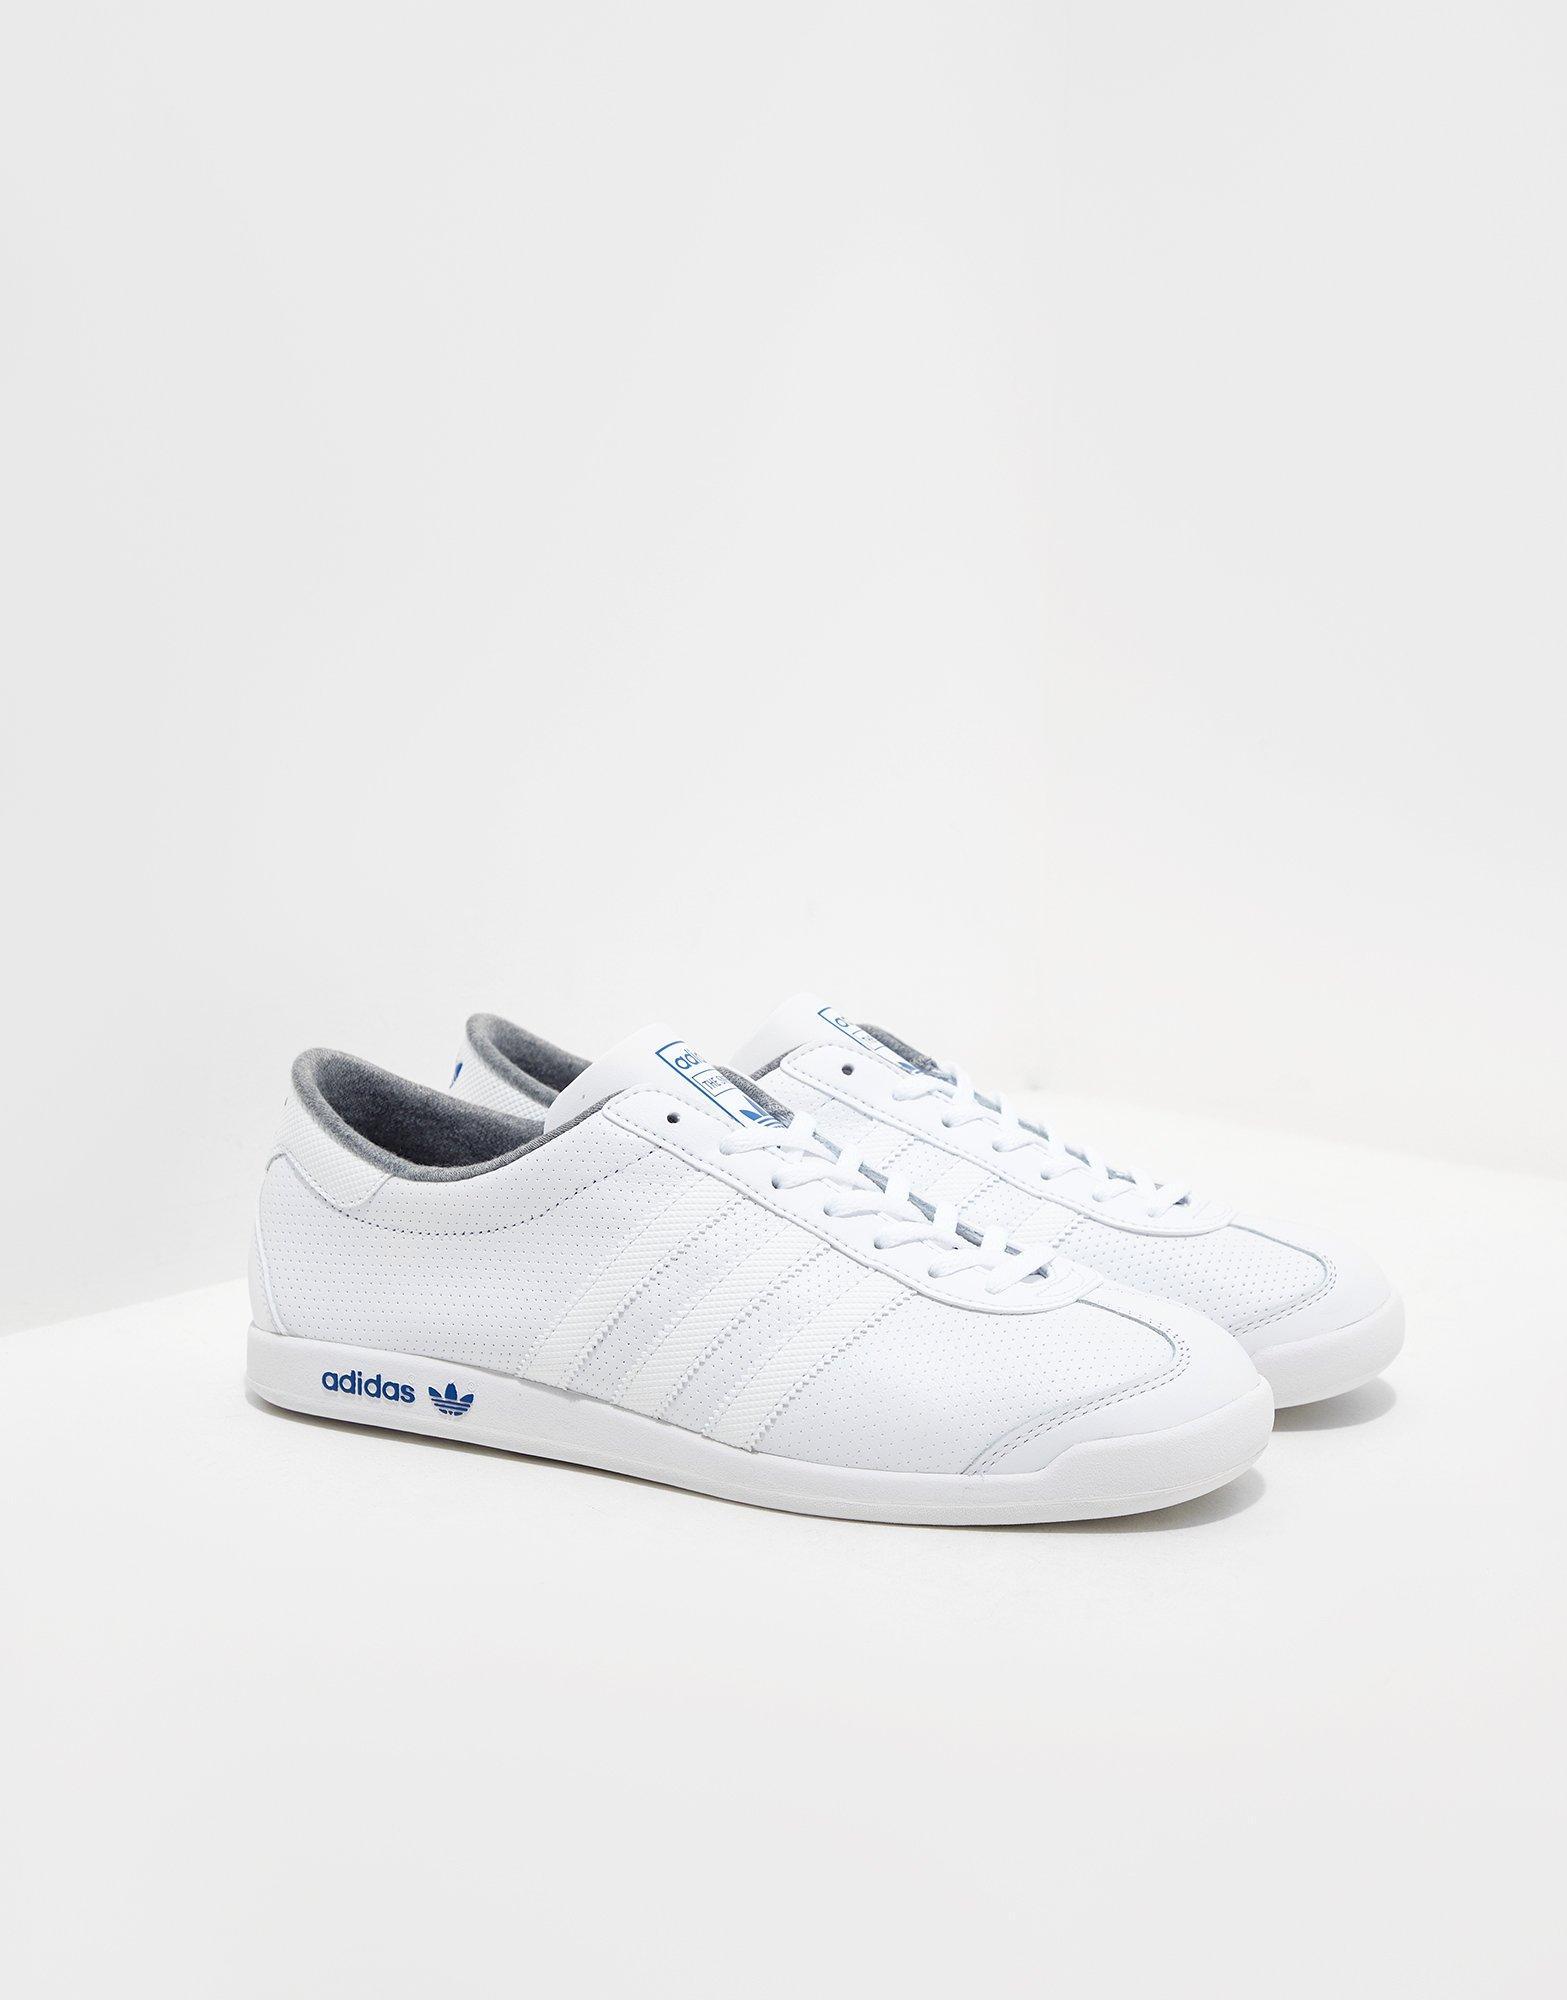 adidas Originals The Sneeker White for Men | Lyst